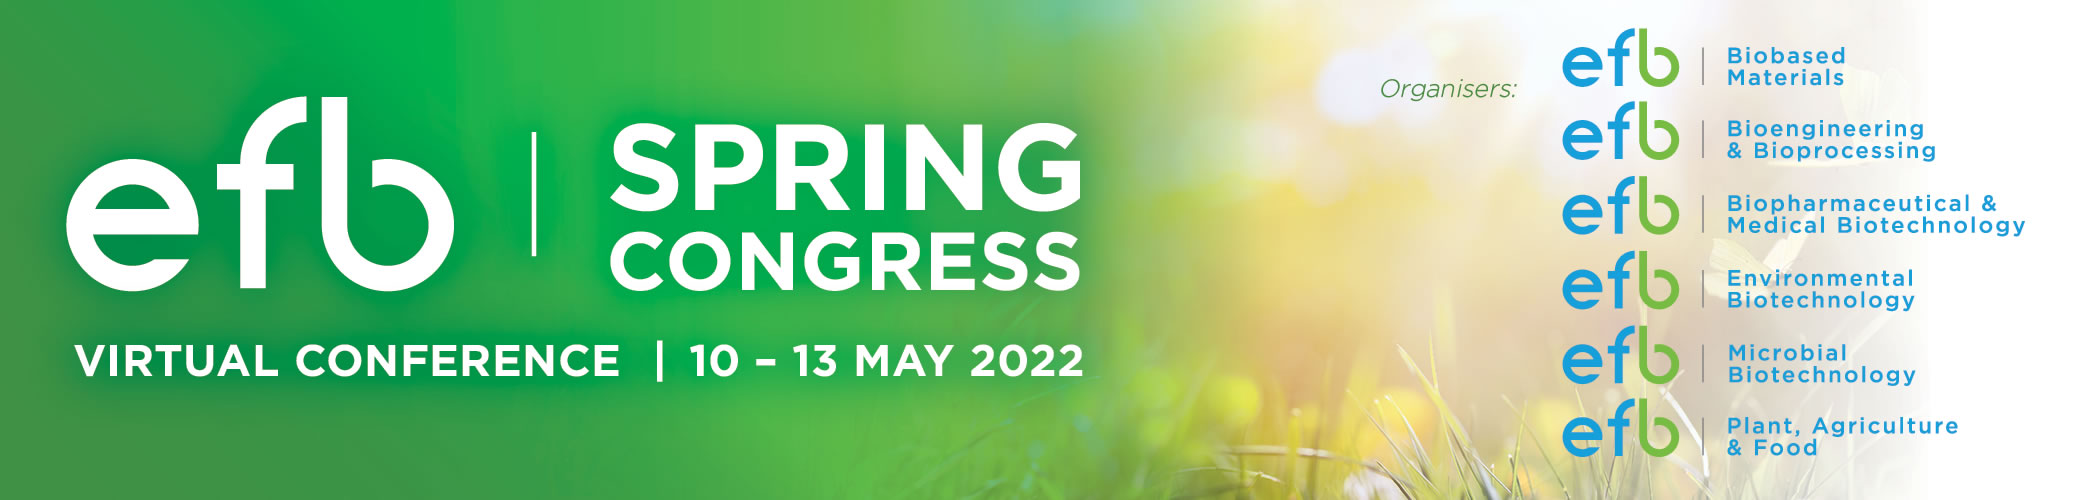 EFB Spring Congress